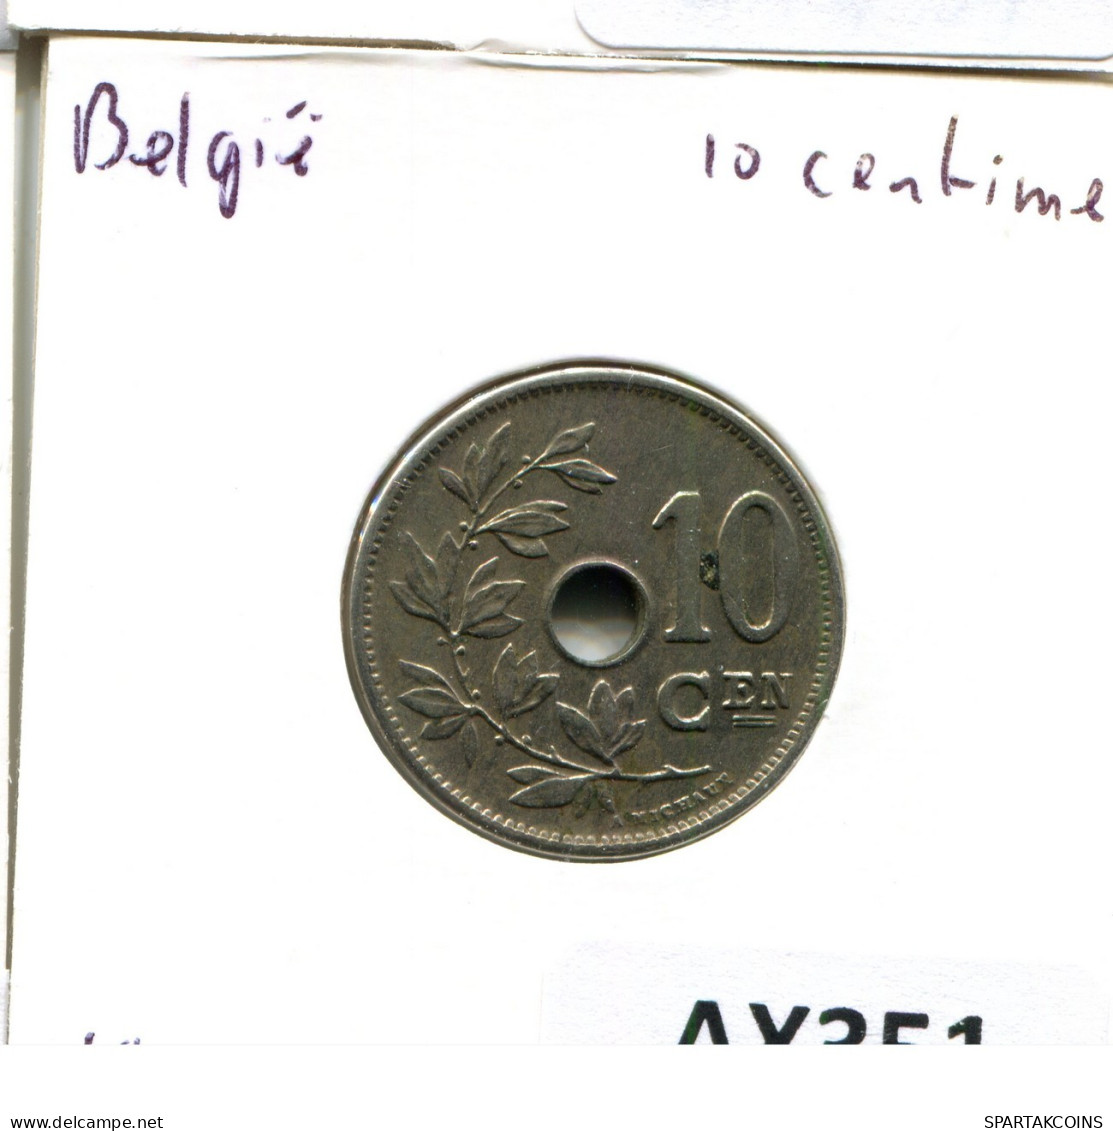 10 CENTIMES 1904 BELGIUM Coin DUTCH Text #AX351.U.A - 10 Centimes